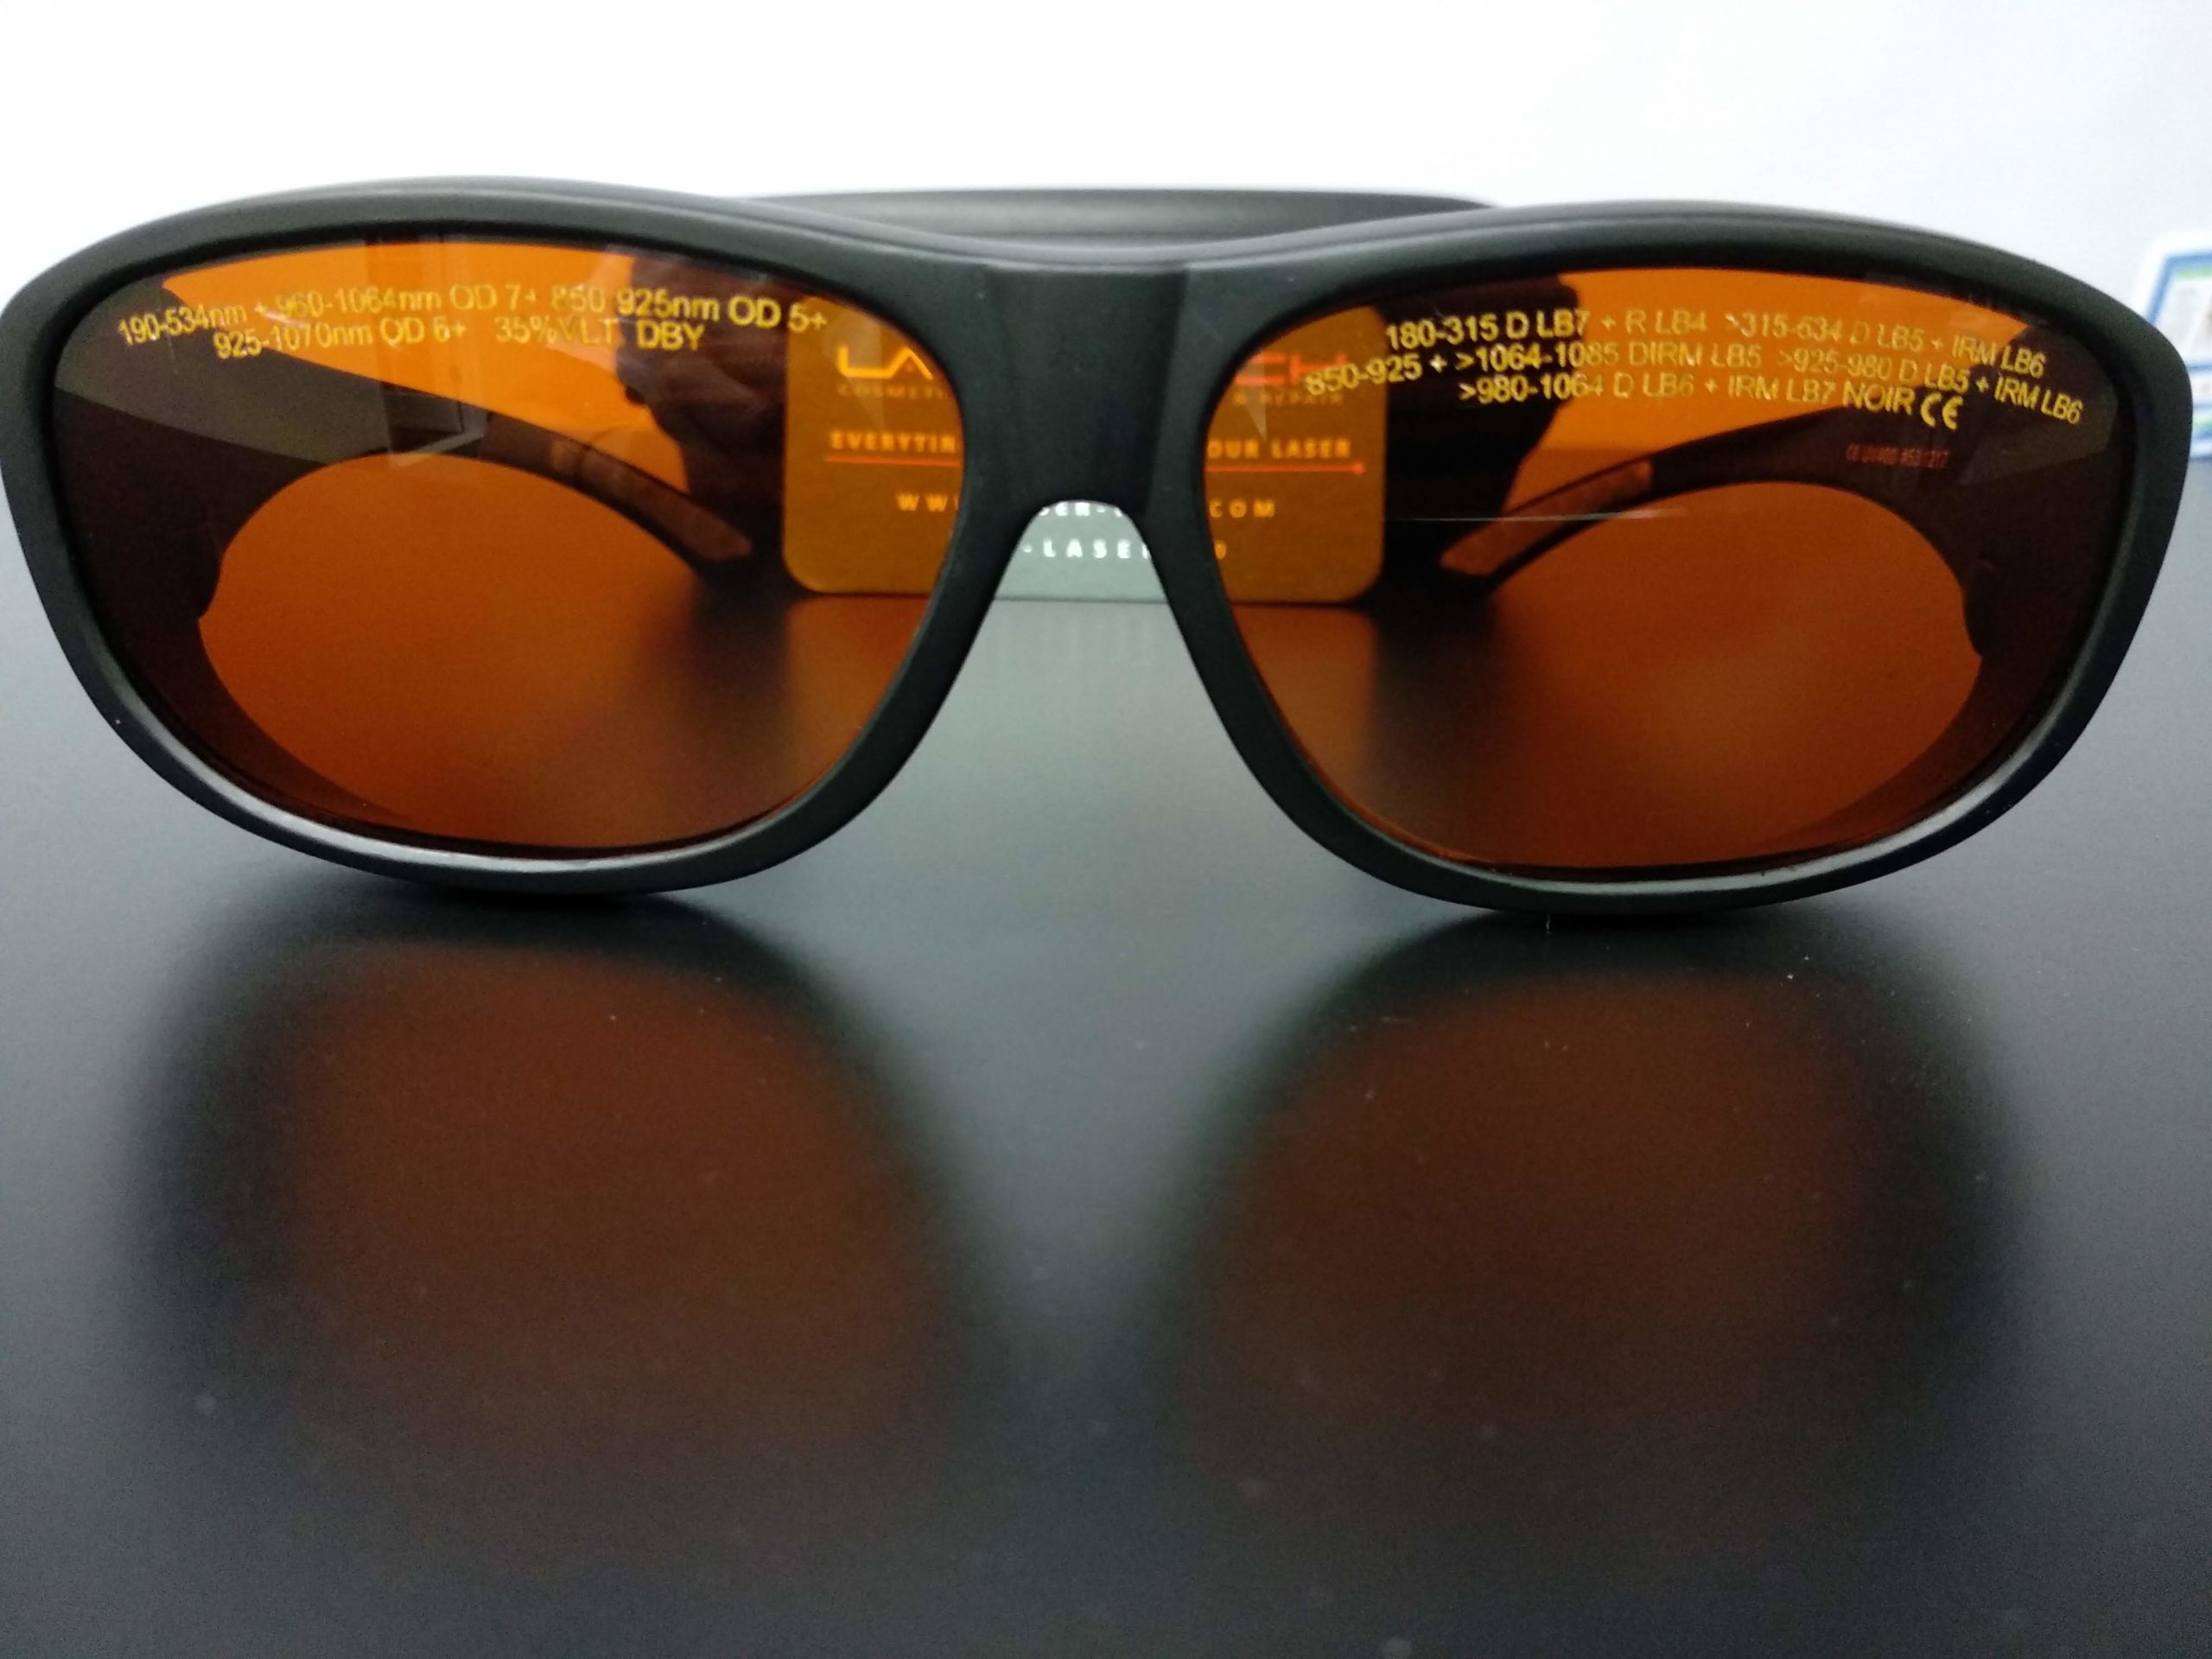 Gafas de seguridad para depilación láser, 200 – 540 nm y 900-1100 nm  Q-switched Laser Tattoo Removal Laser Protective Eyewear Laser Safety  Glasses and